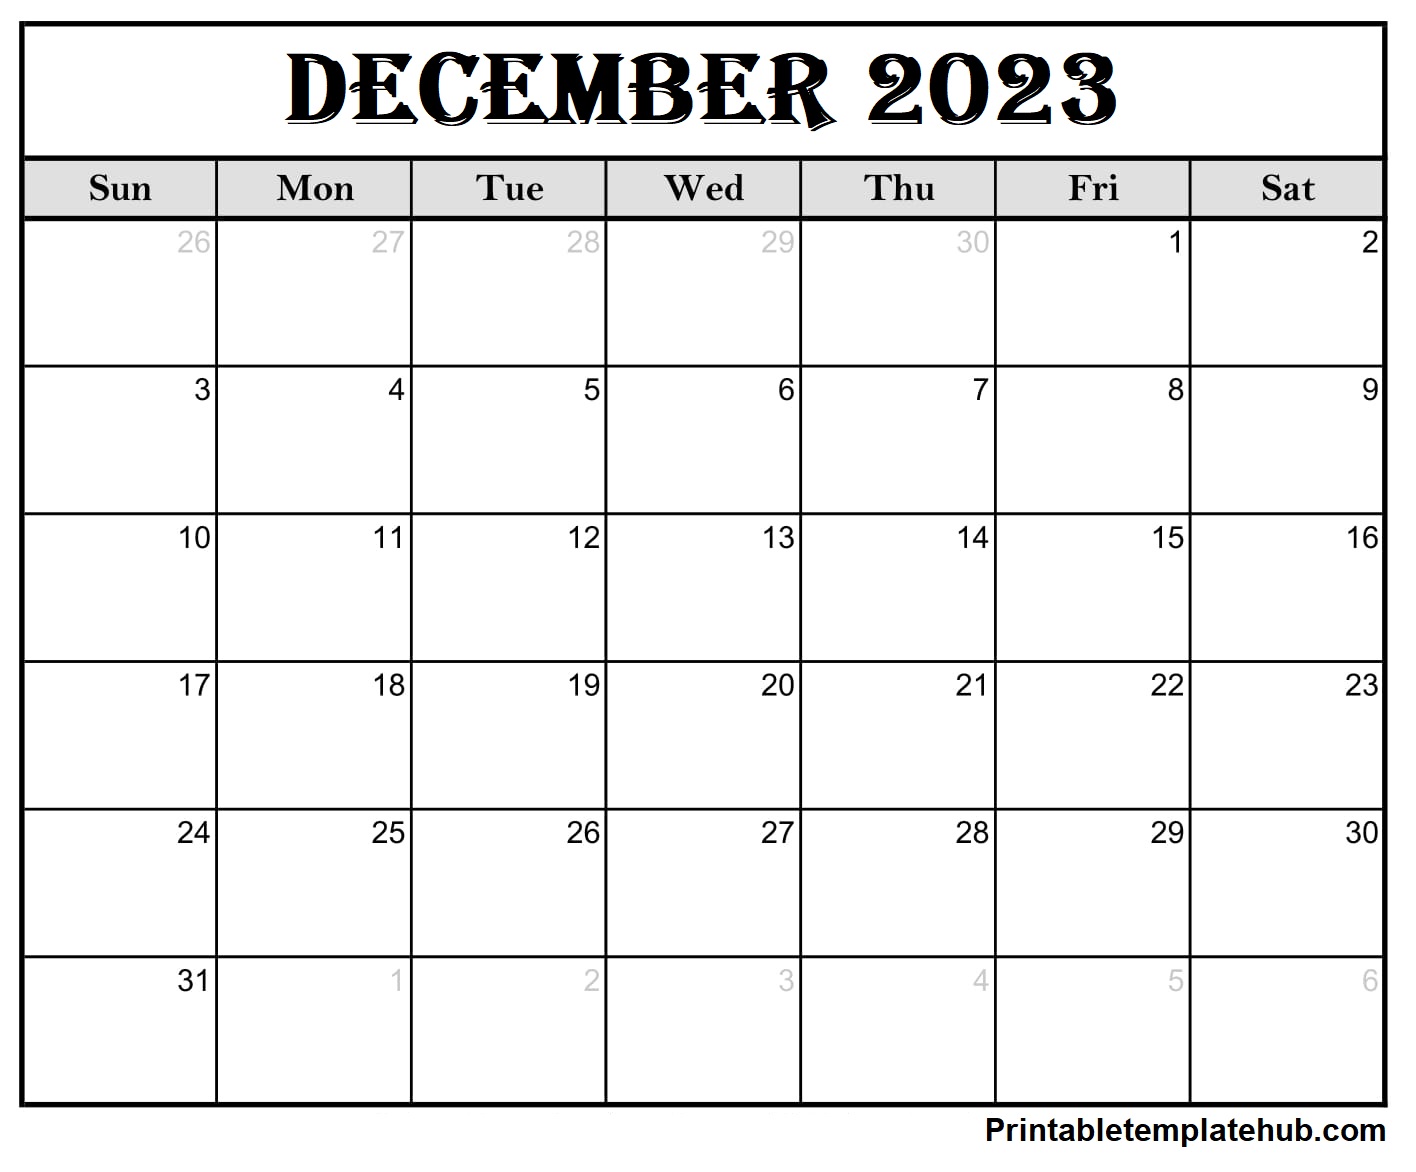 December 2023 Calendar Free